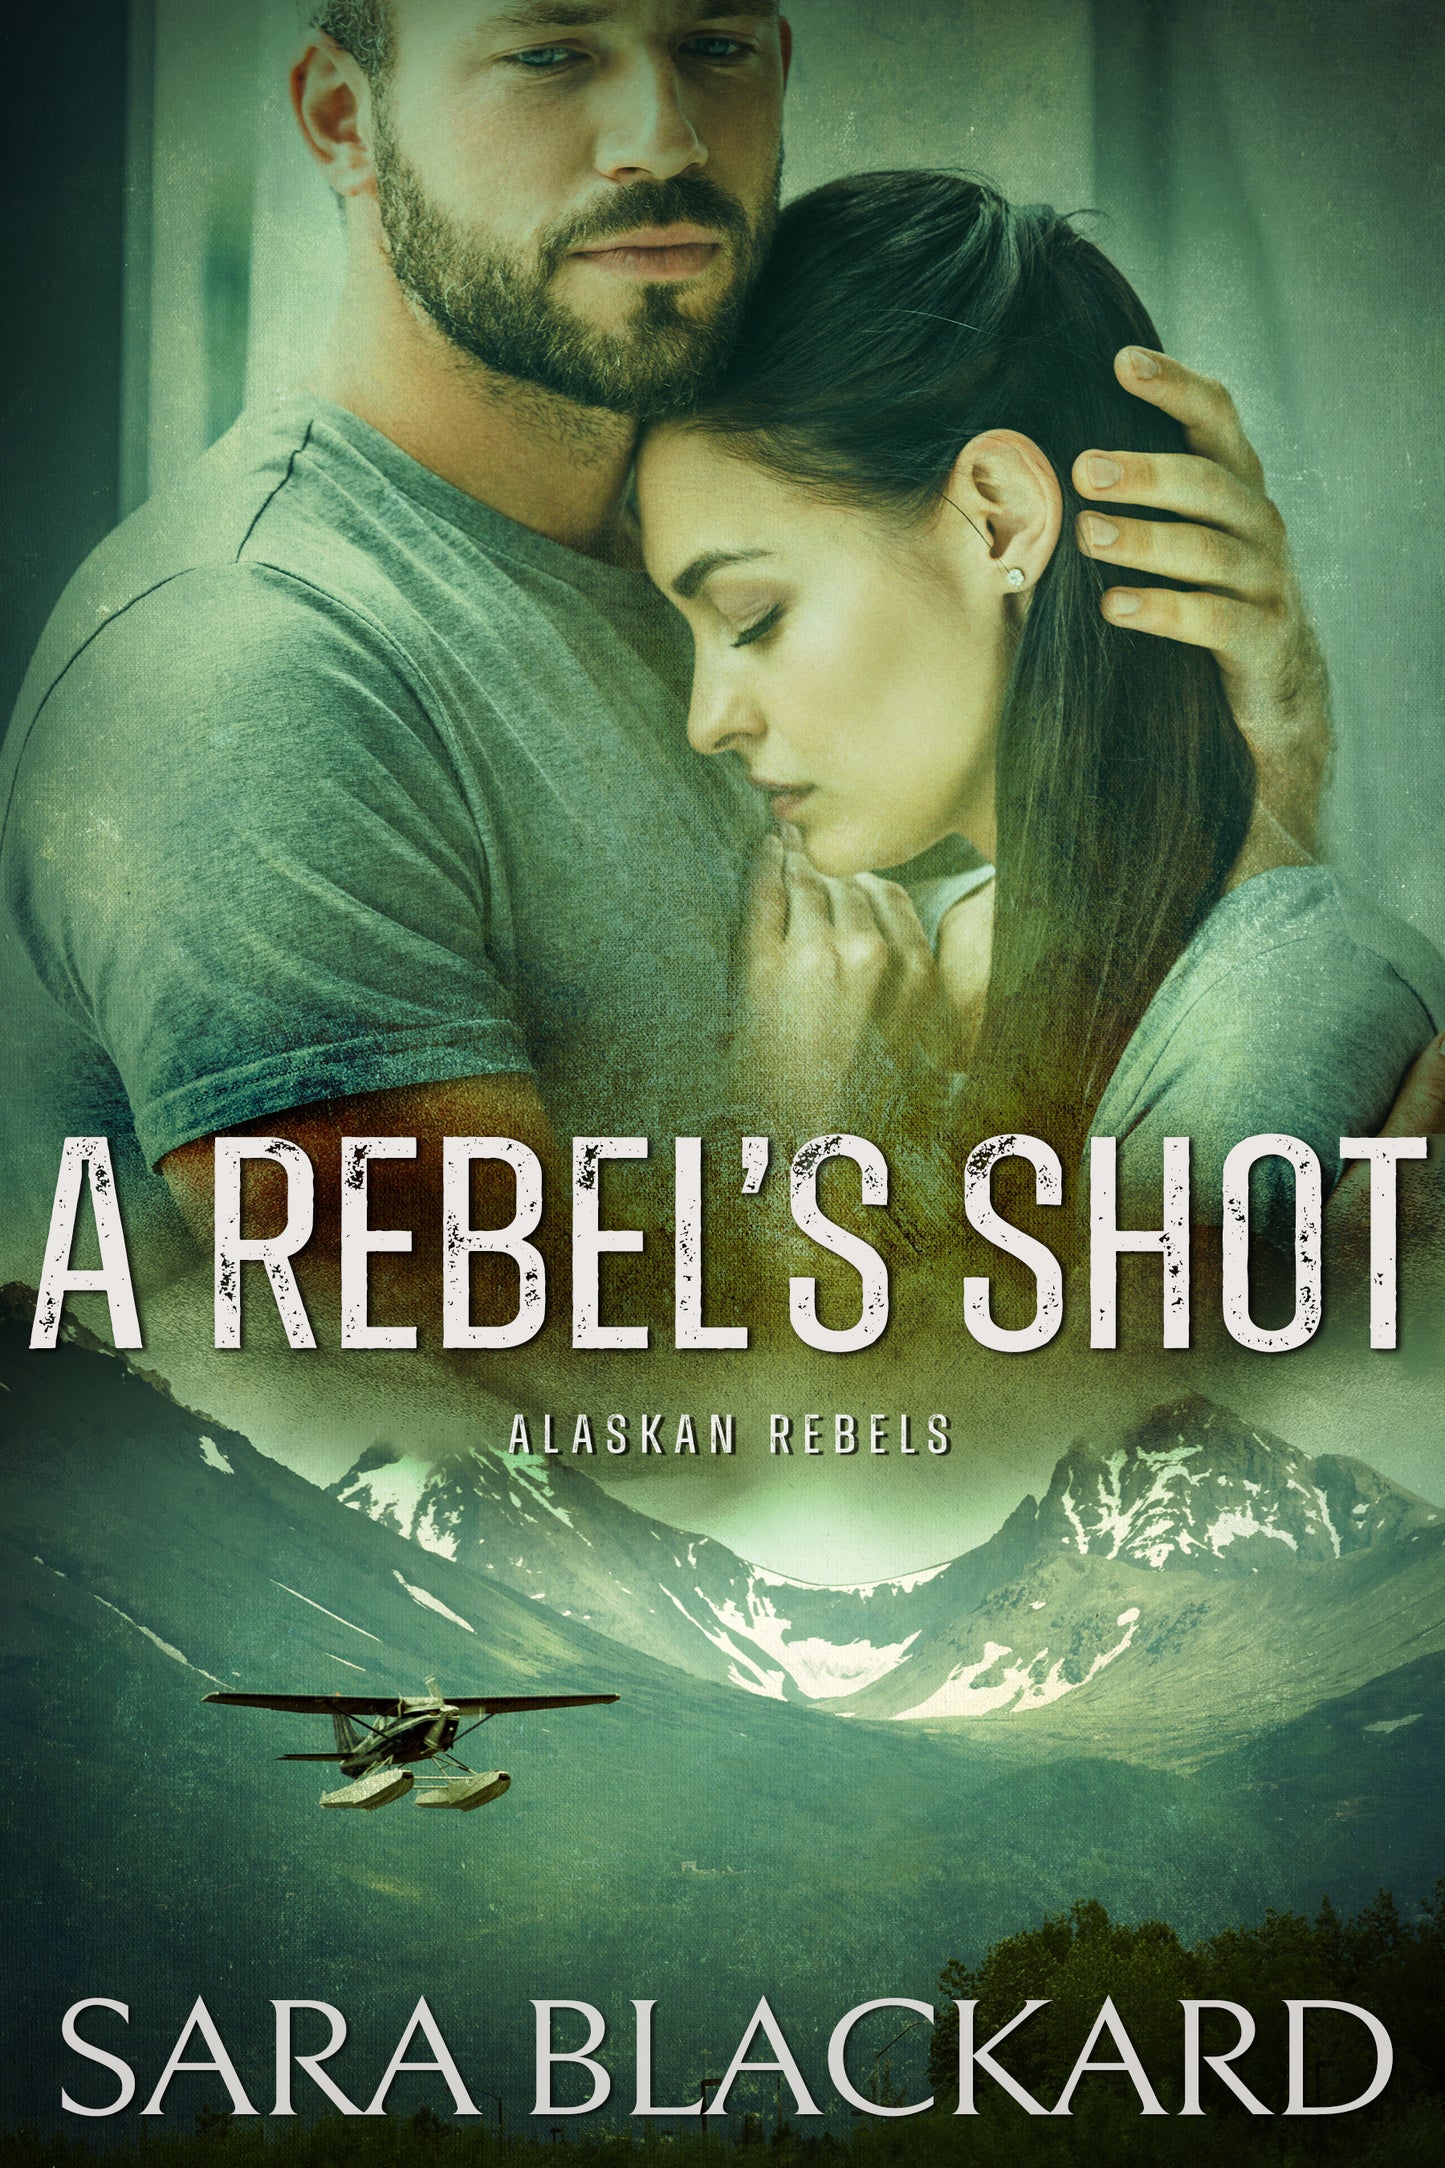 A Rebel's Shot Preorder